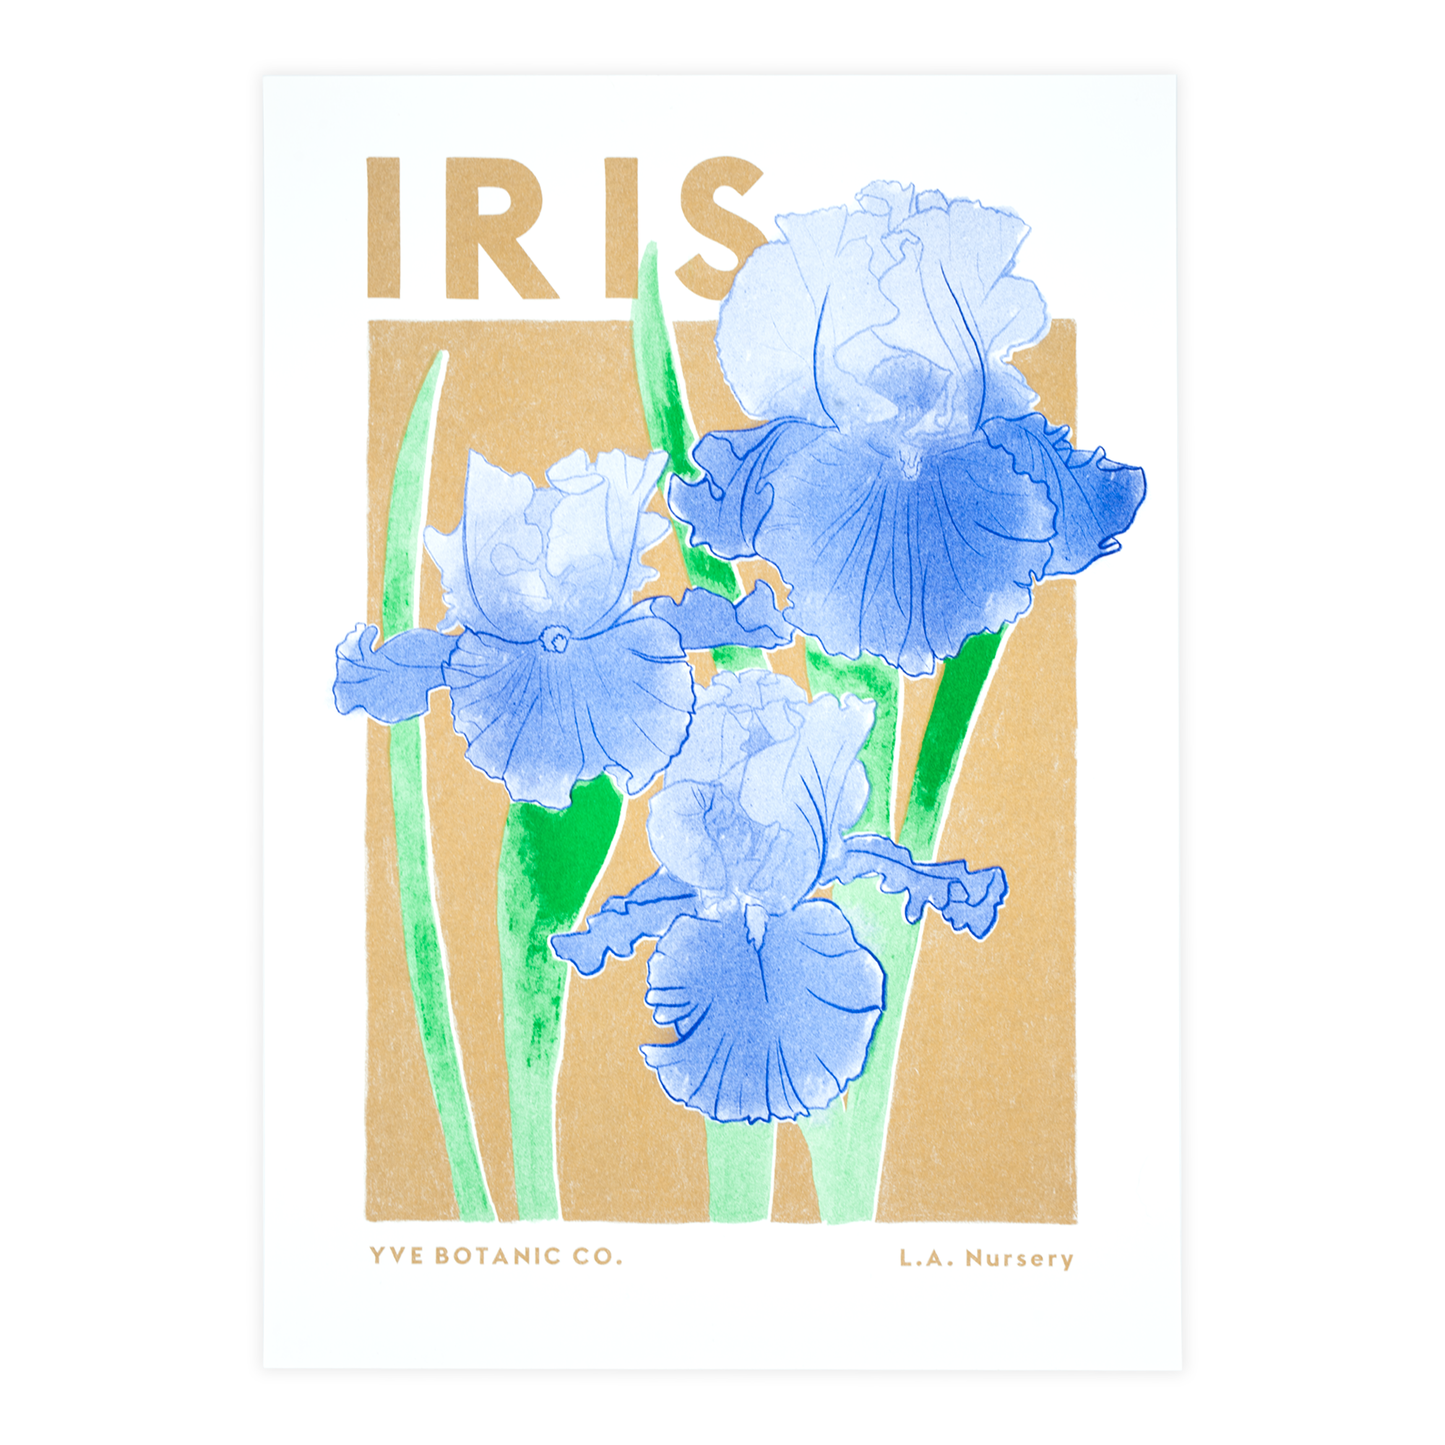 A risograph print featuring an illustration of an Iris